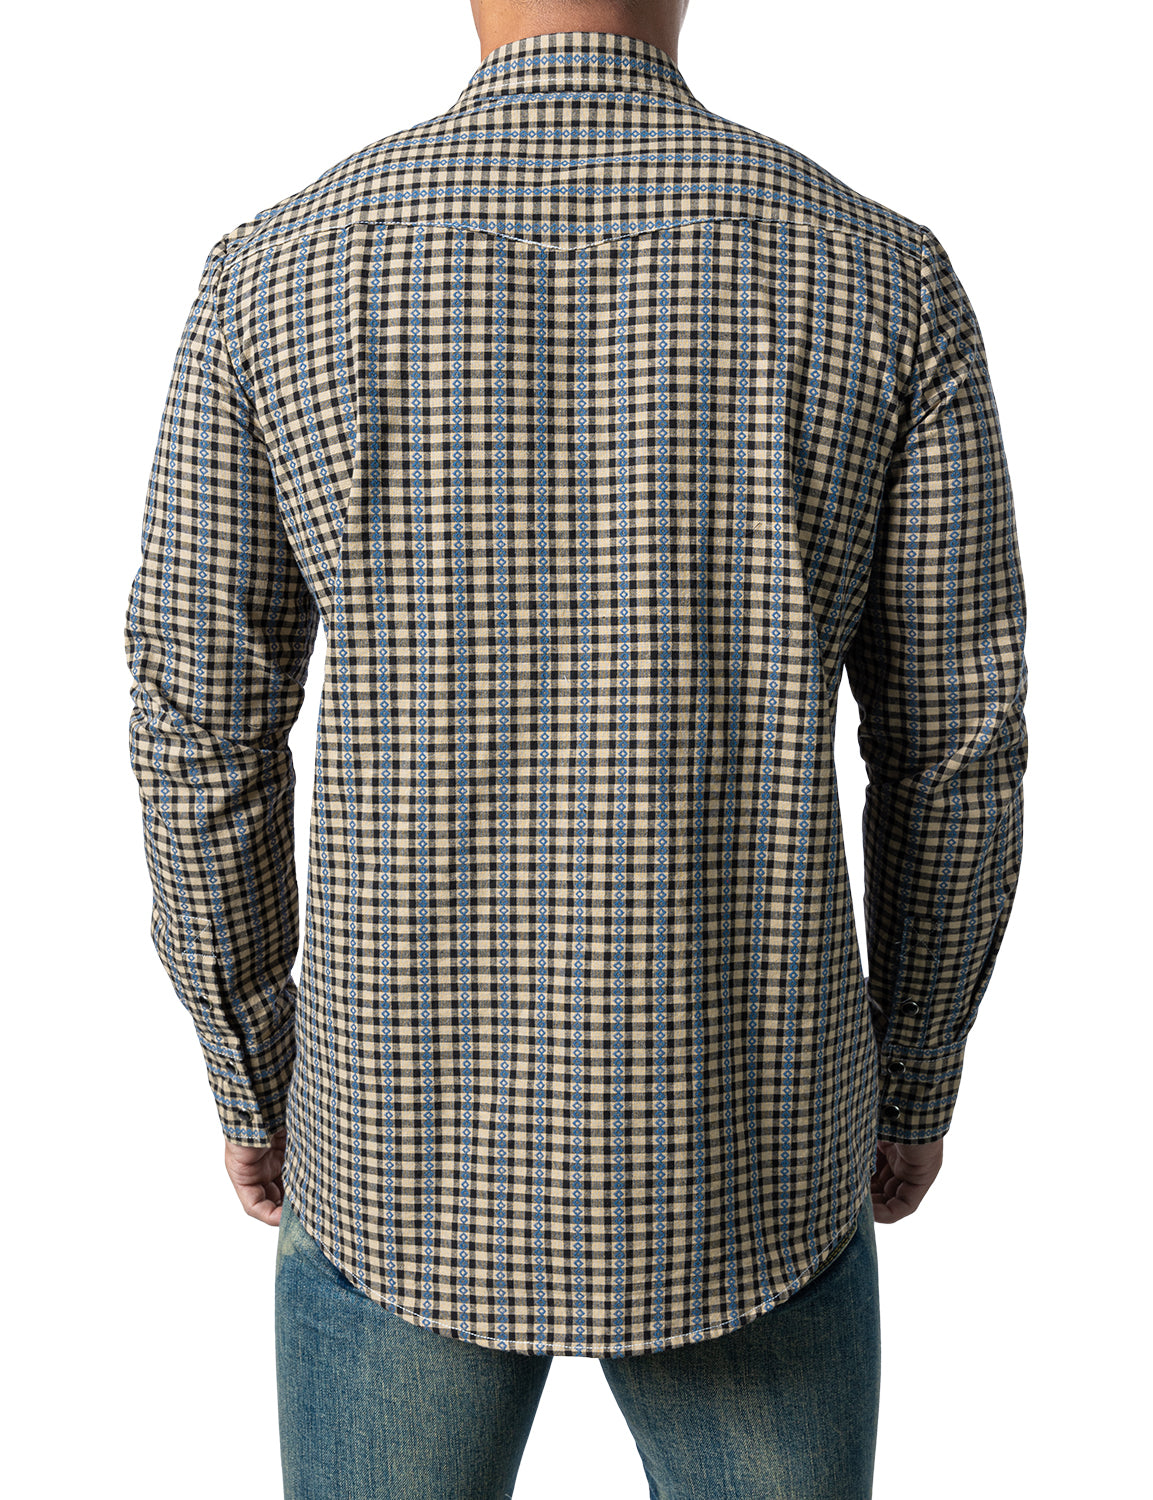 JOGAL Men's Western Plaid Shirts Long Sleeve Two Pockets Pearl Snap Work Shirts